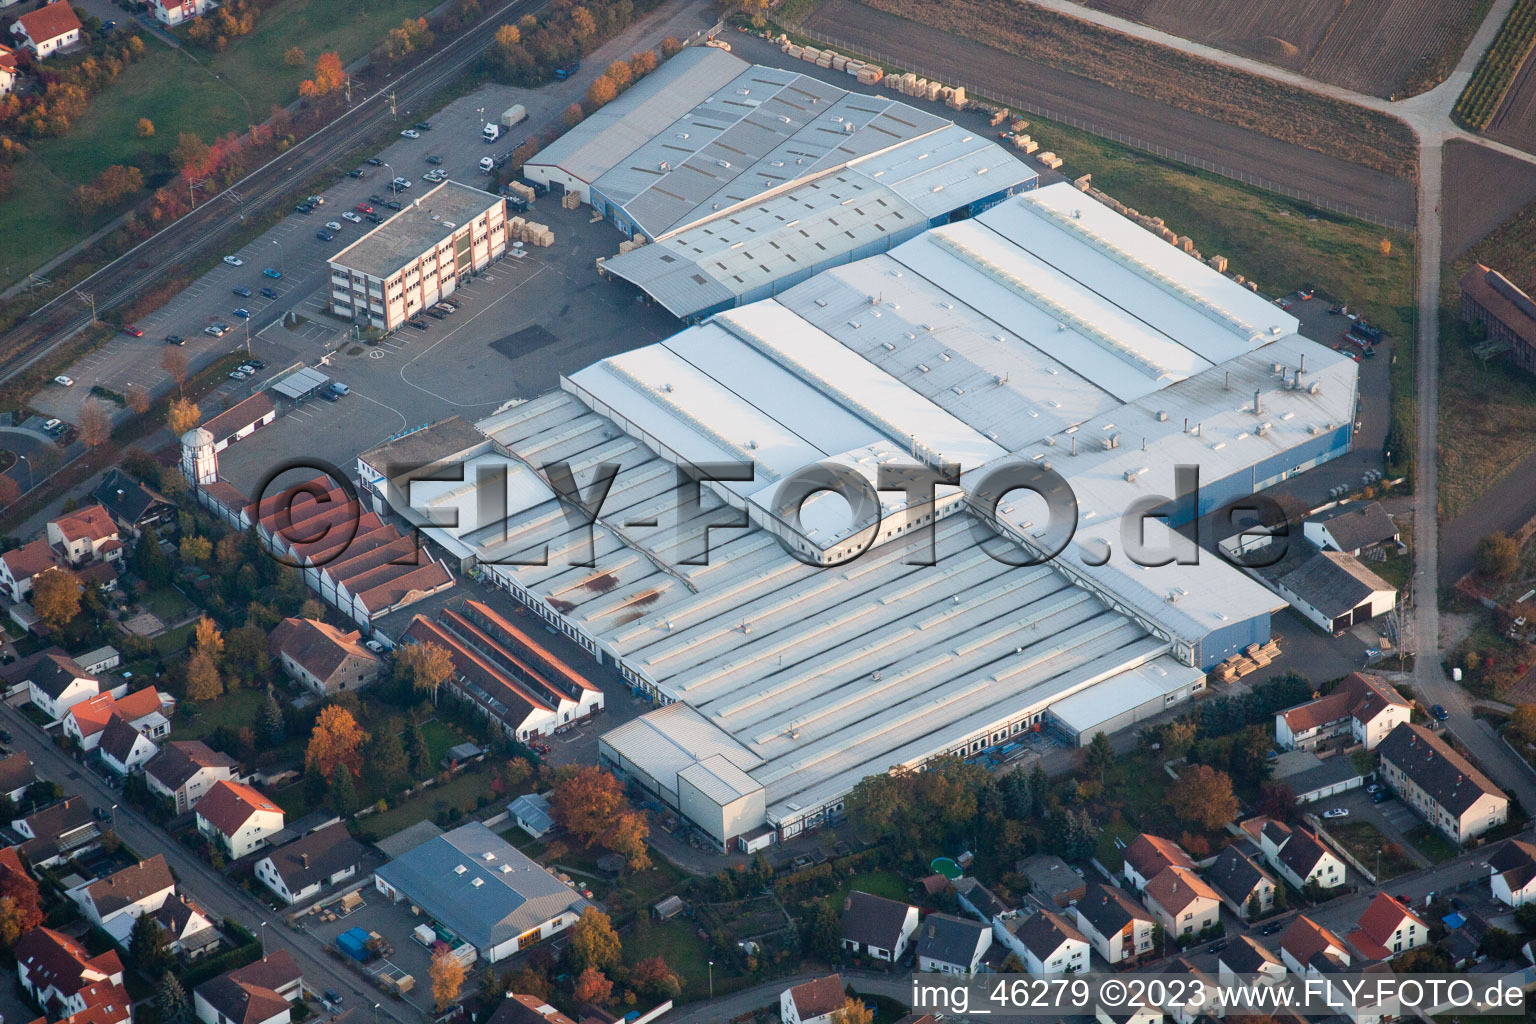 Aerial view of Building and production halls on the premises of Kardex Remstar Produktion Deutschland GmbH Kardex-Platz in the district Sondernheim in Bellheim in the state Rhineland-Palatinate